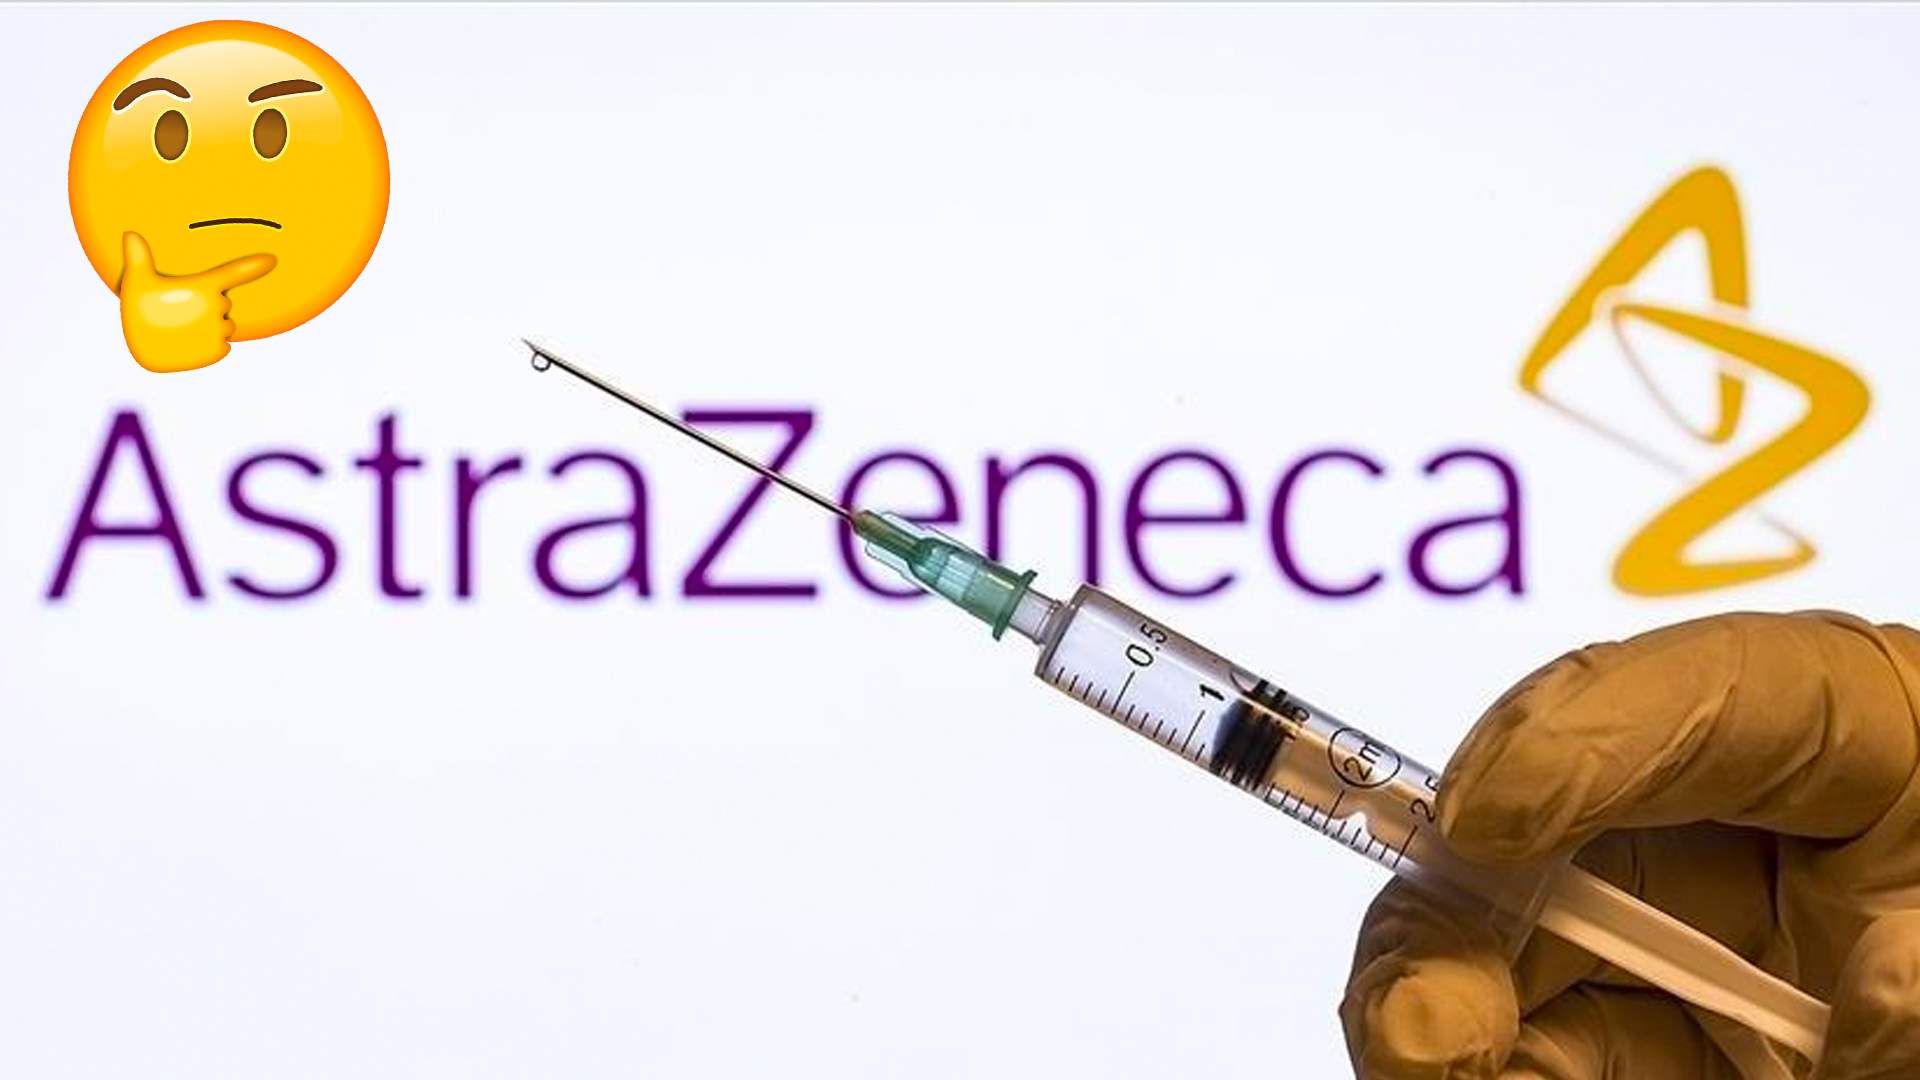 EU launches legal action against AstraZeneca